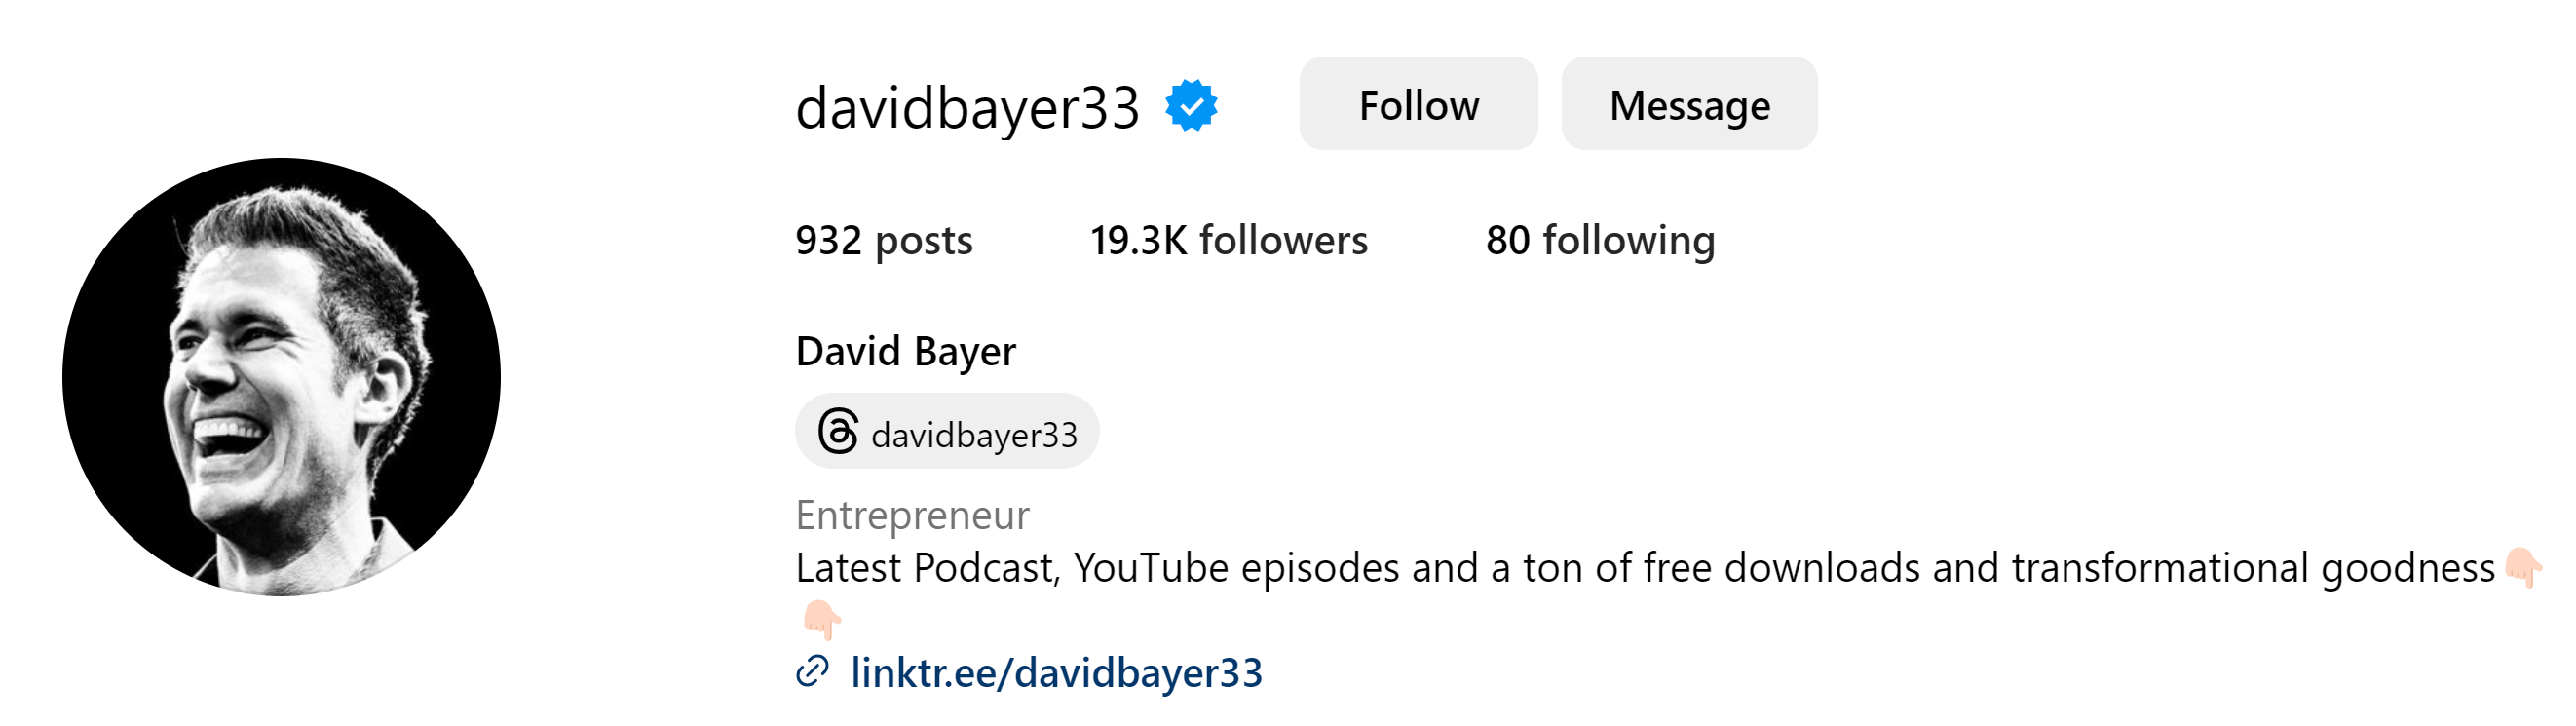 Who Is David Bayer